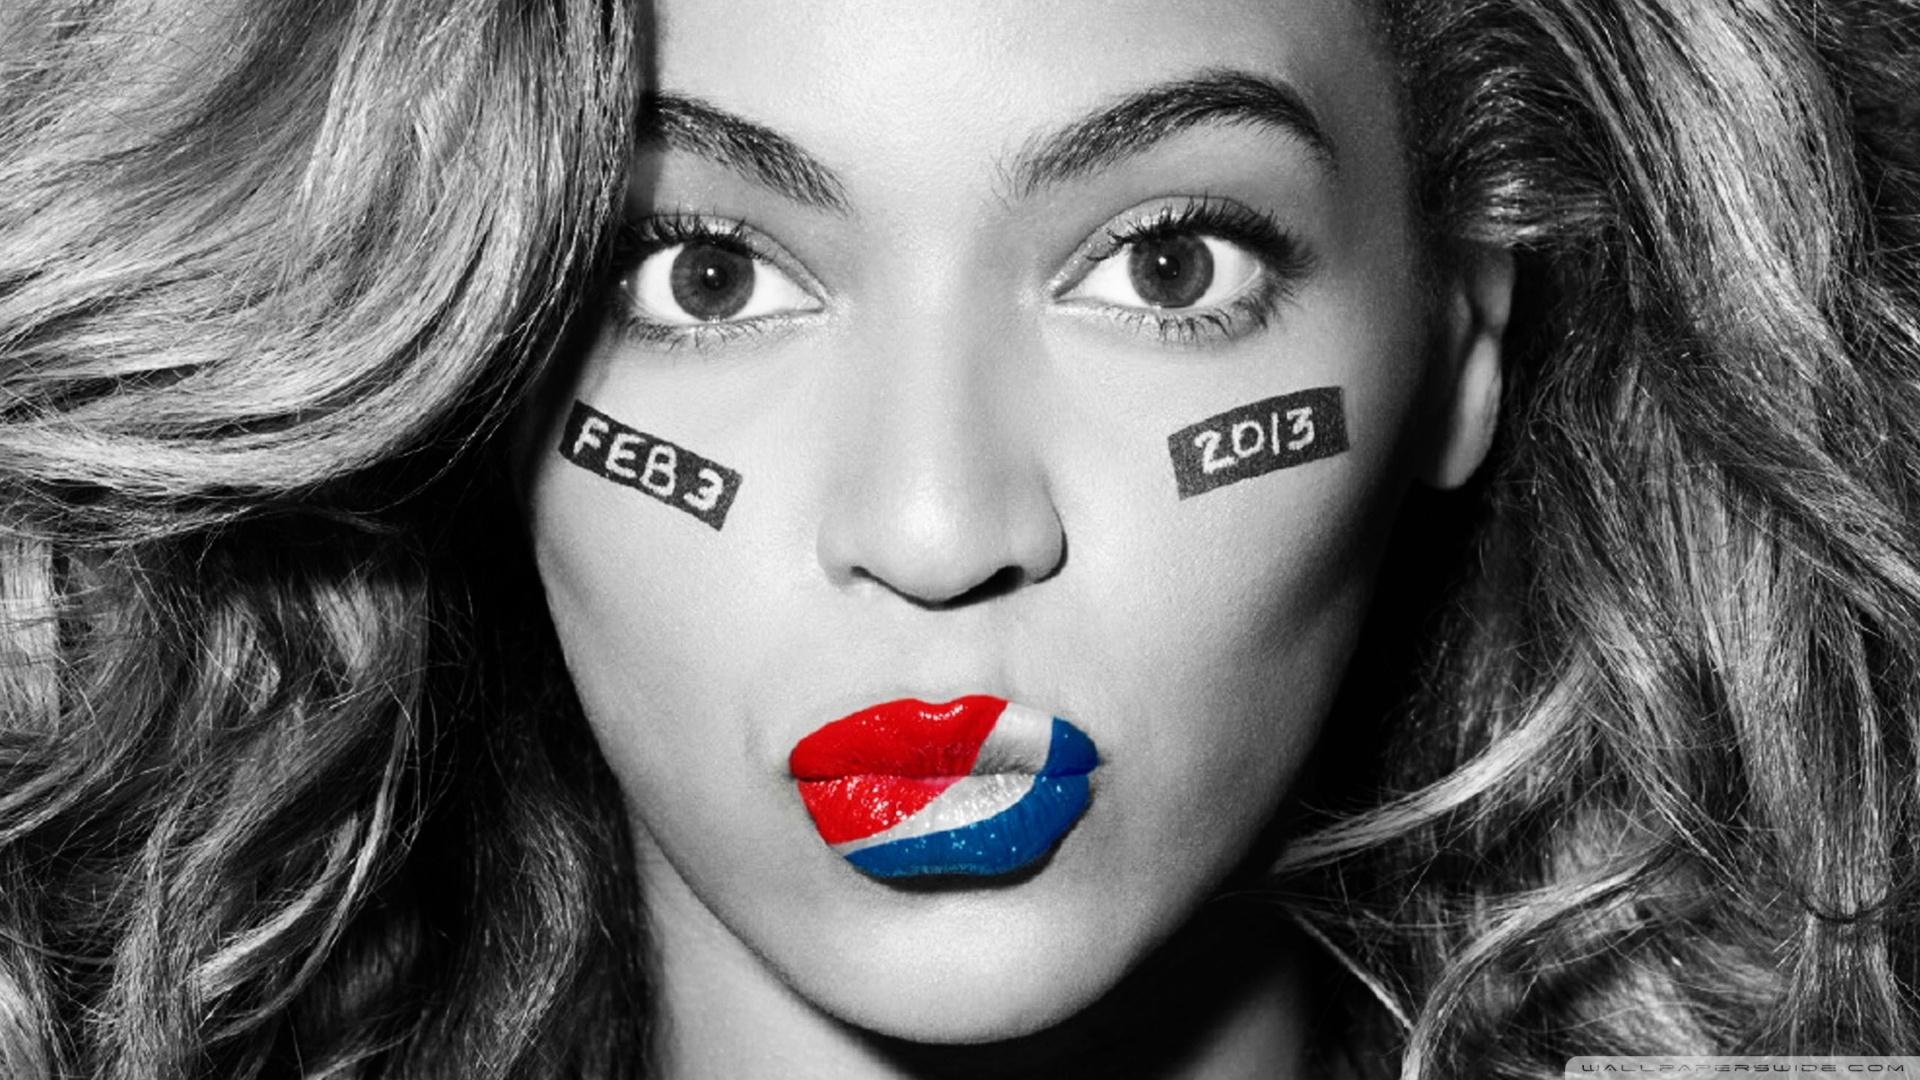 Wallpaper Of Famous People - Beyonce Pepsi - HD Wallpaper 